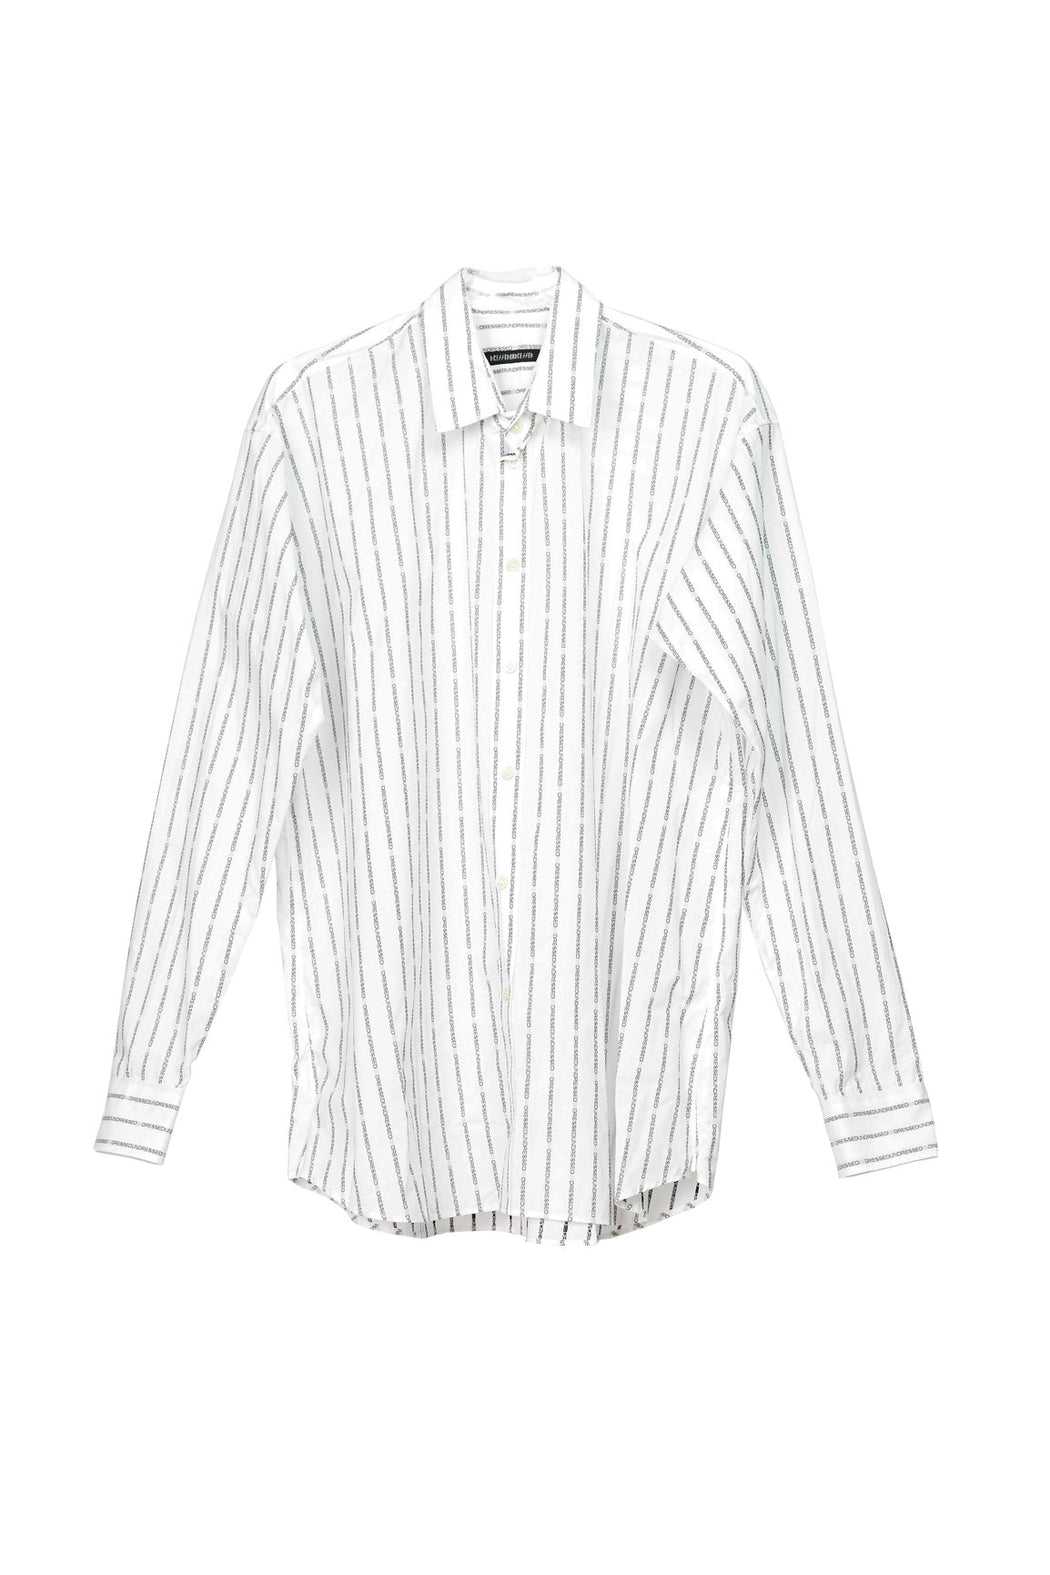 Logo Stripe Shirt - White/Black